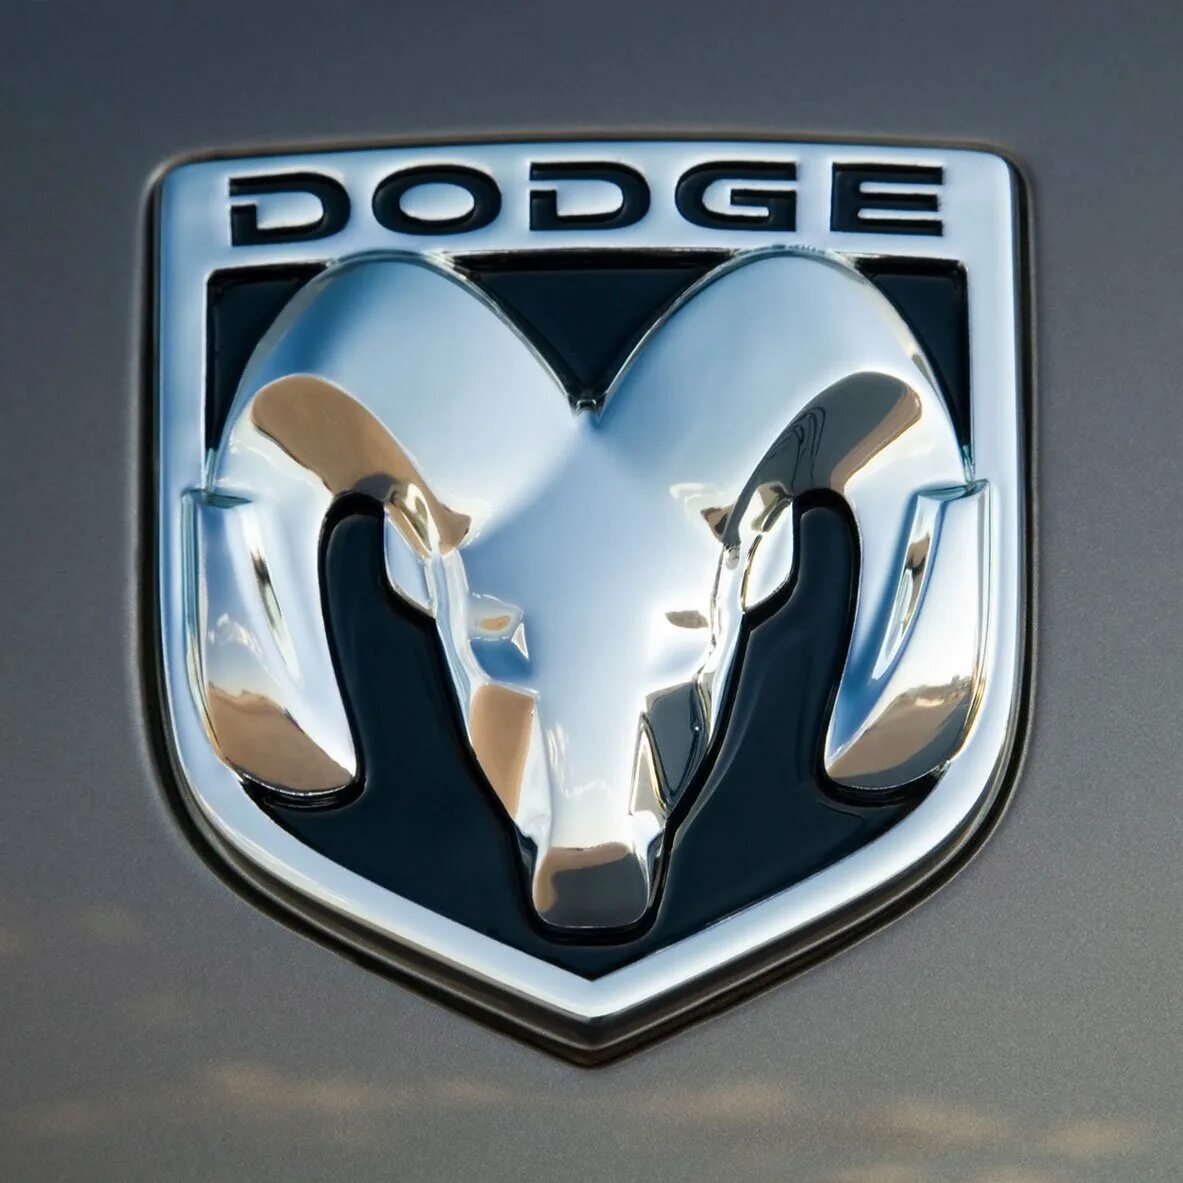 Бык на какой машине. Марка машины Додж. Додж значок машины. Dodge Ram логотип. Додж Челленджер эмблема.